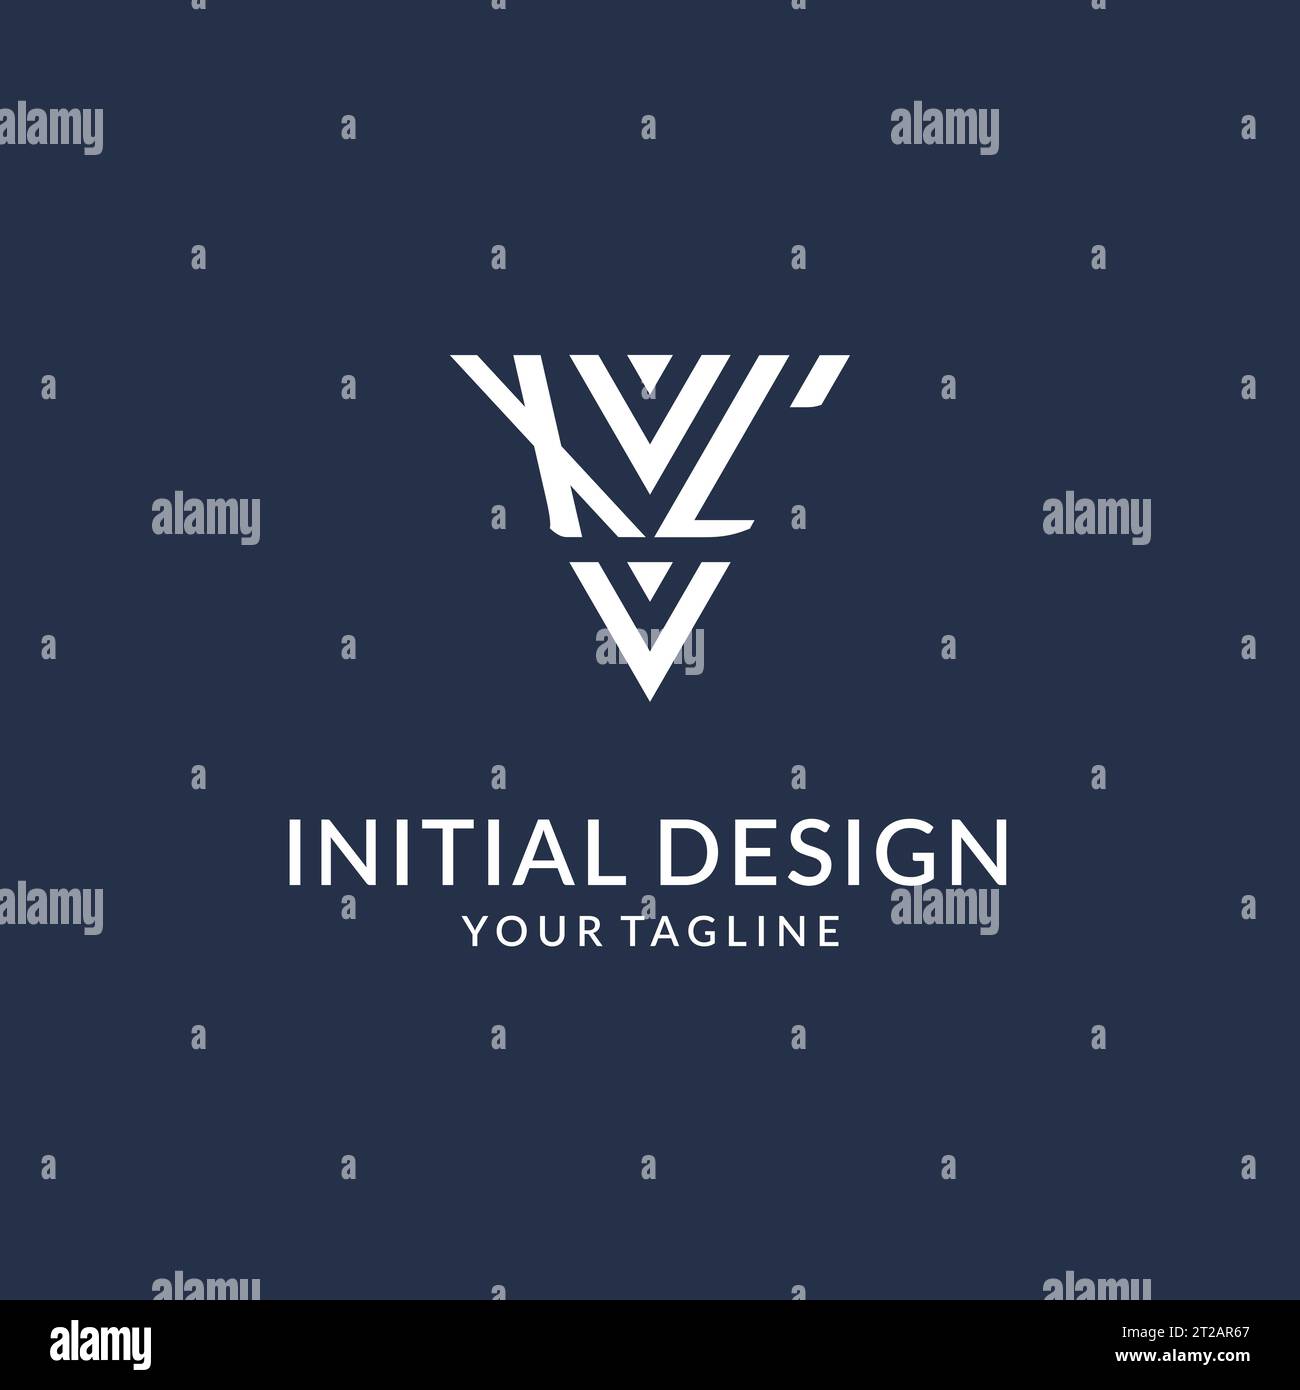 XL triangle monogram logo design ideas, creative initial letter logo with triangular shape logo vector Stock Vector